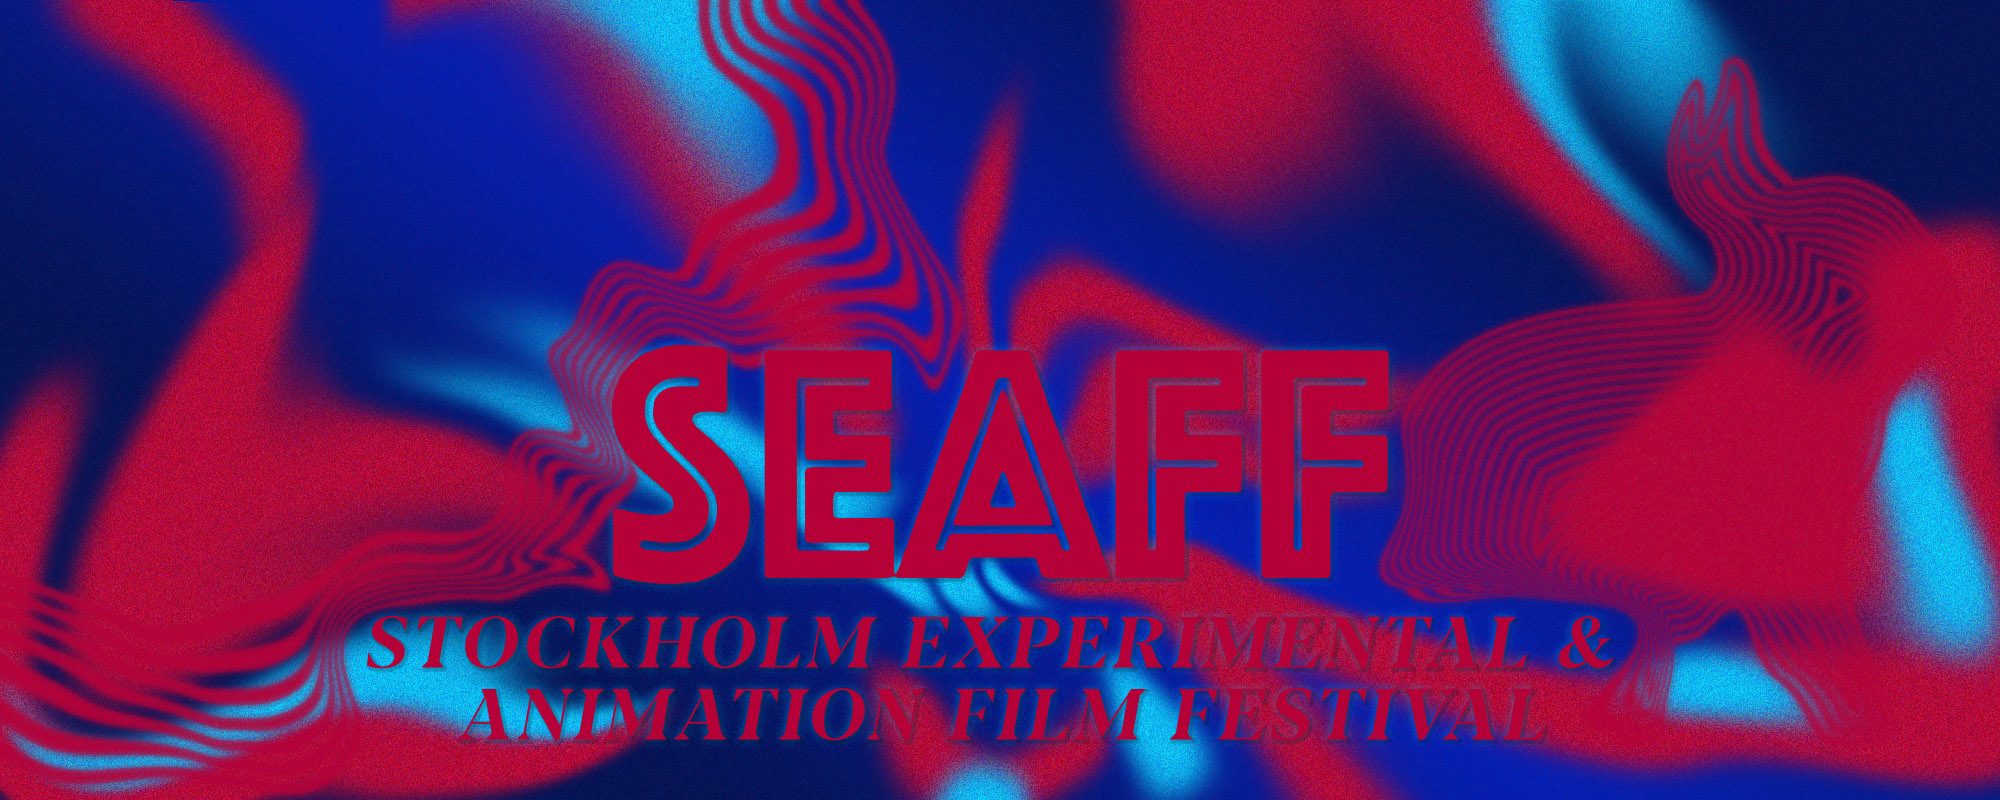 seaff – Stockholm Experiental & Animation Film Festival